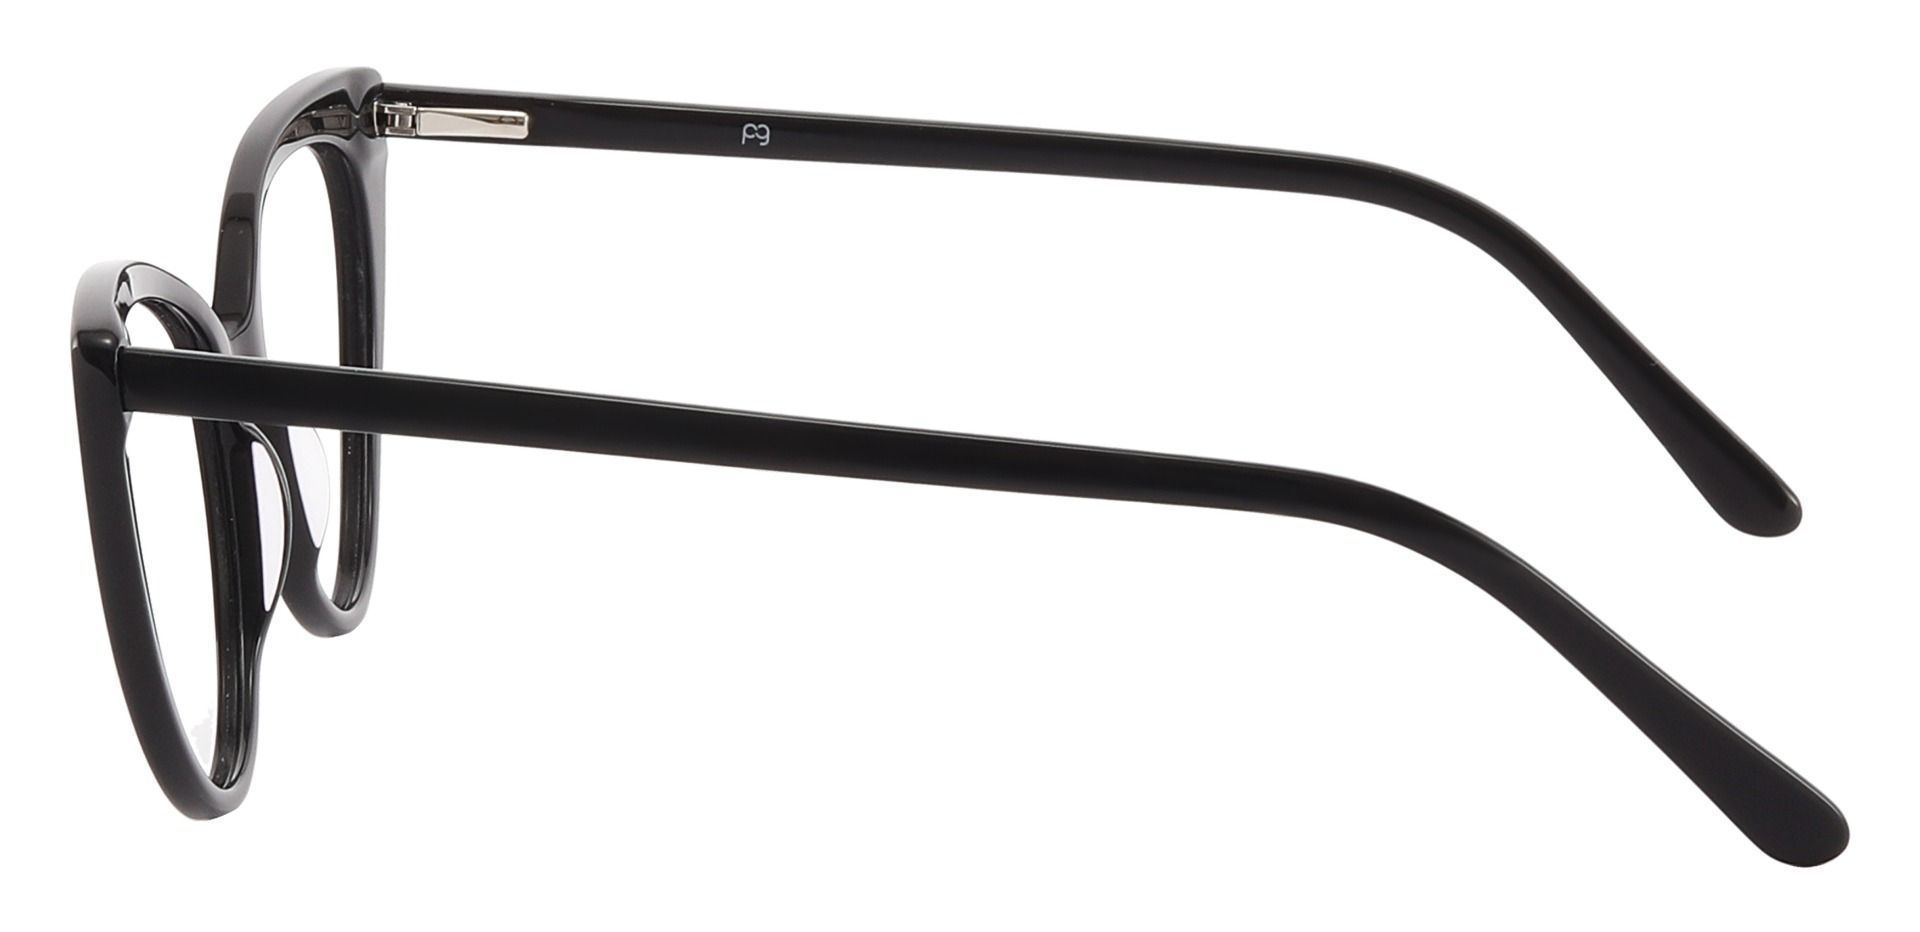 Bristol Cat Eye Non-Rx Glasses - Black